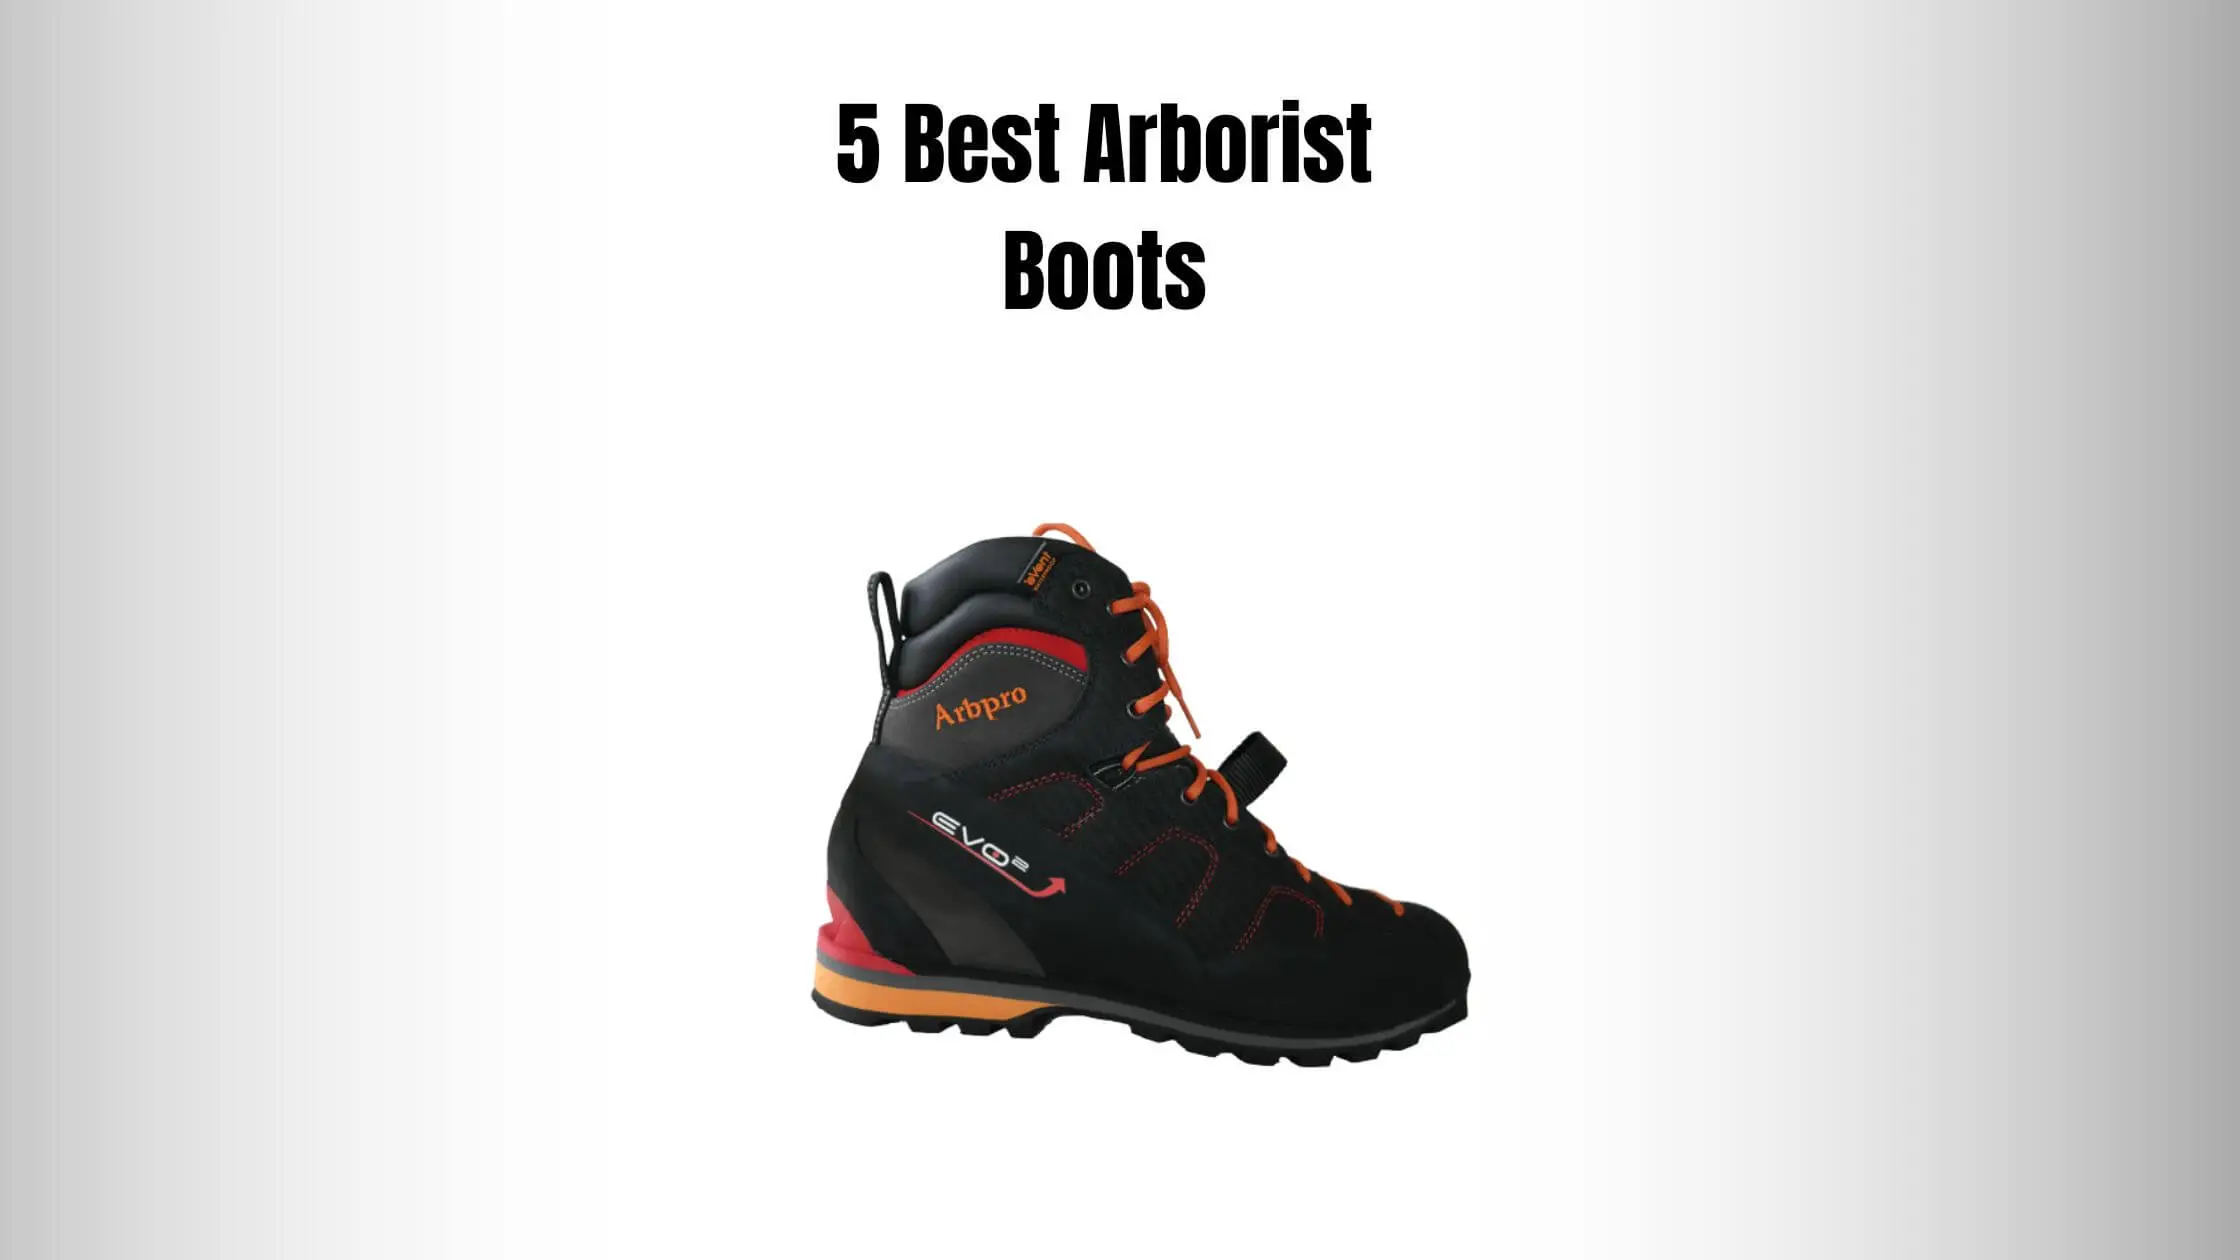 5 Best Arborist Boots